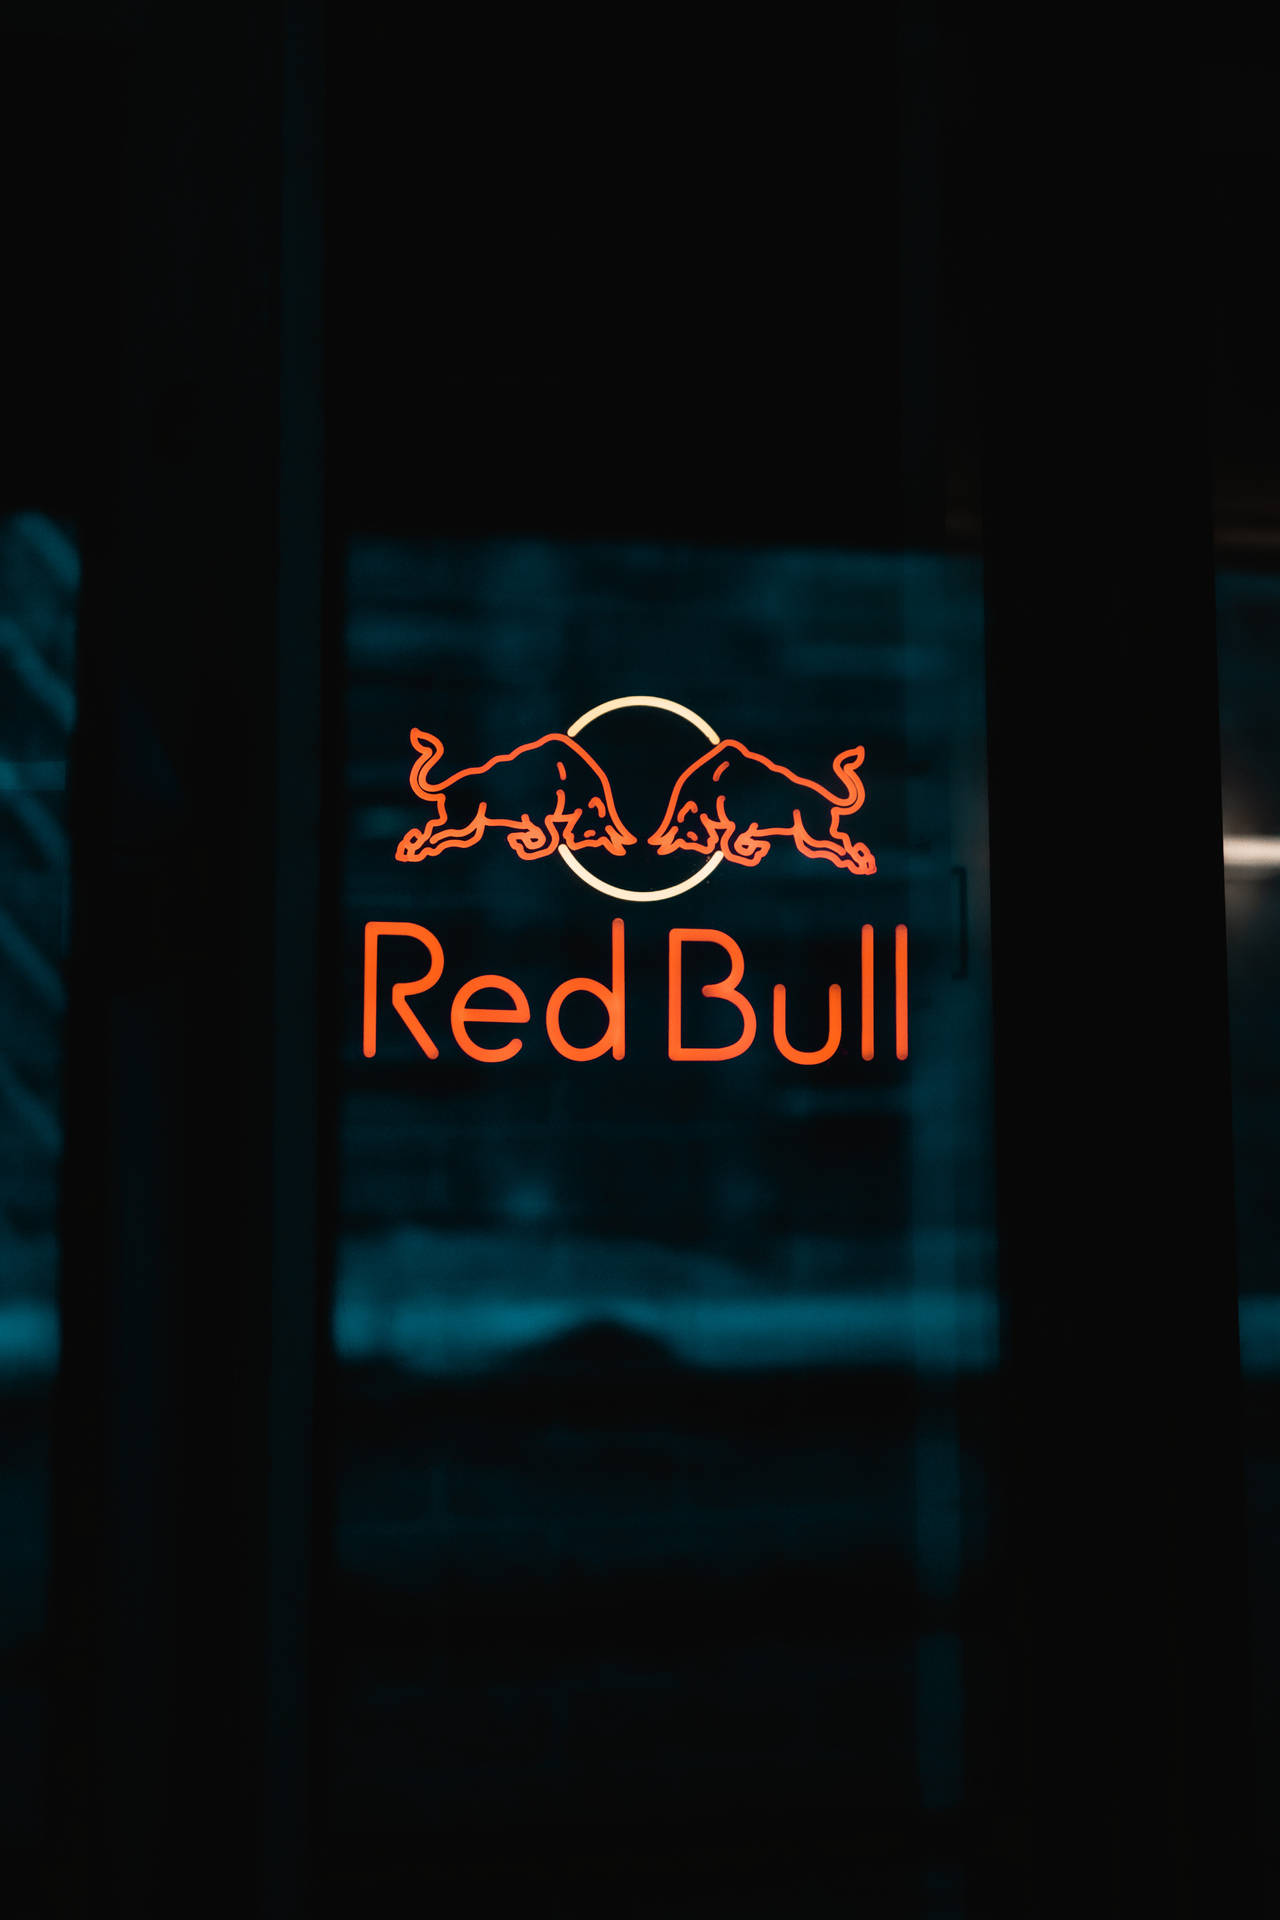 Red Bull Signage Dark Window Background